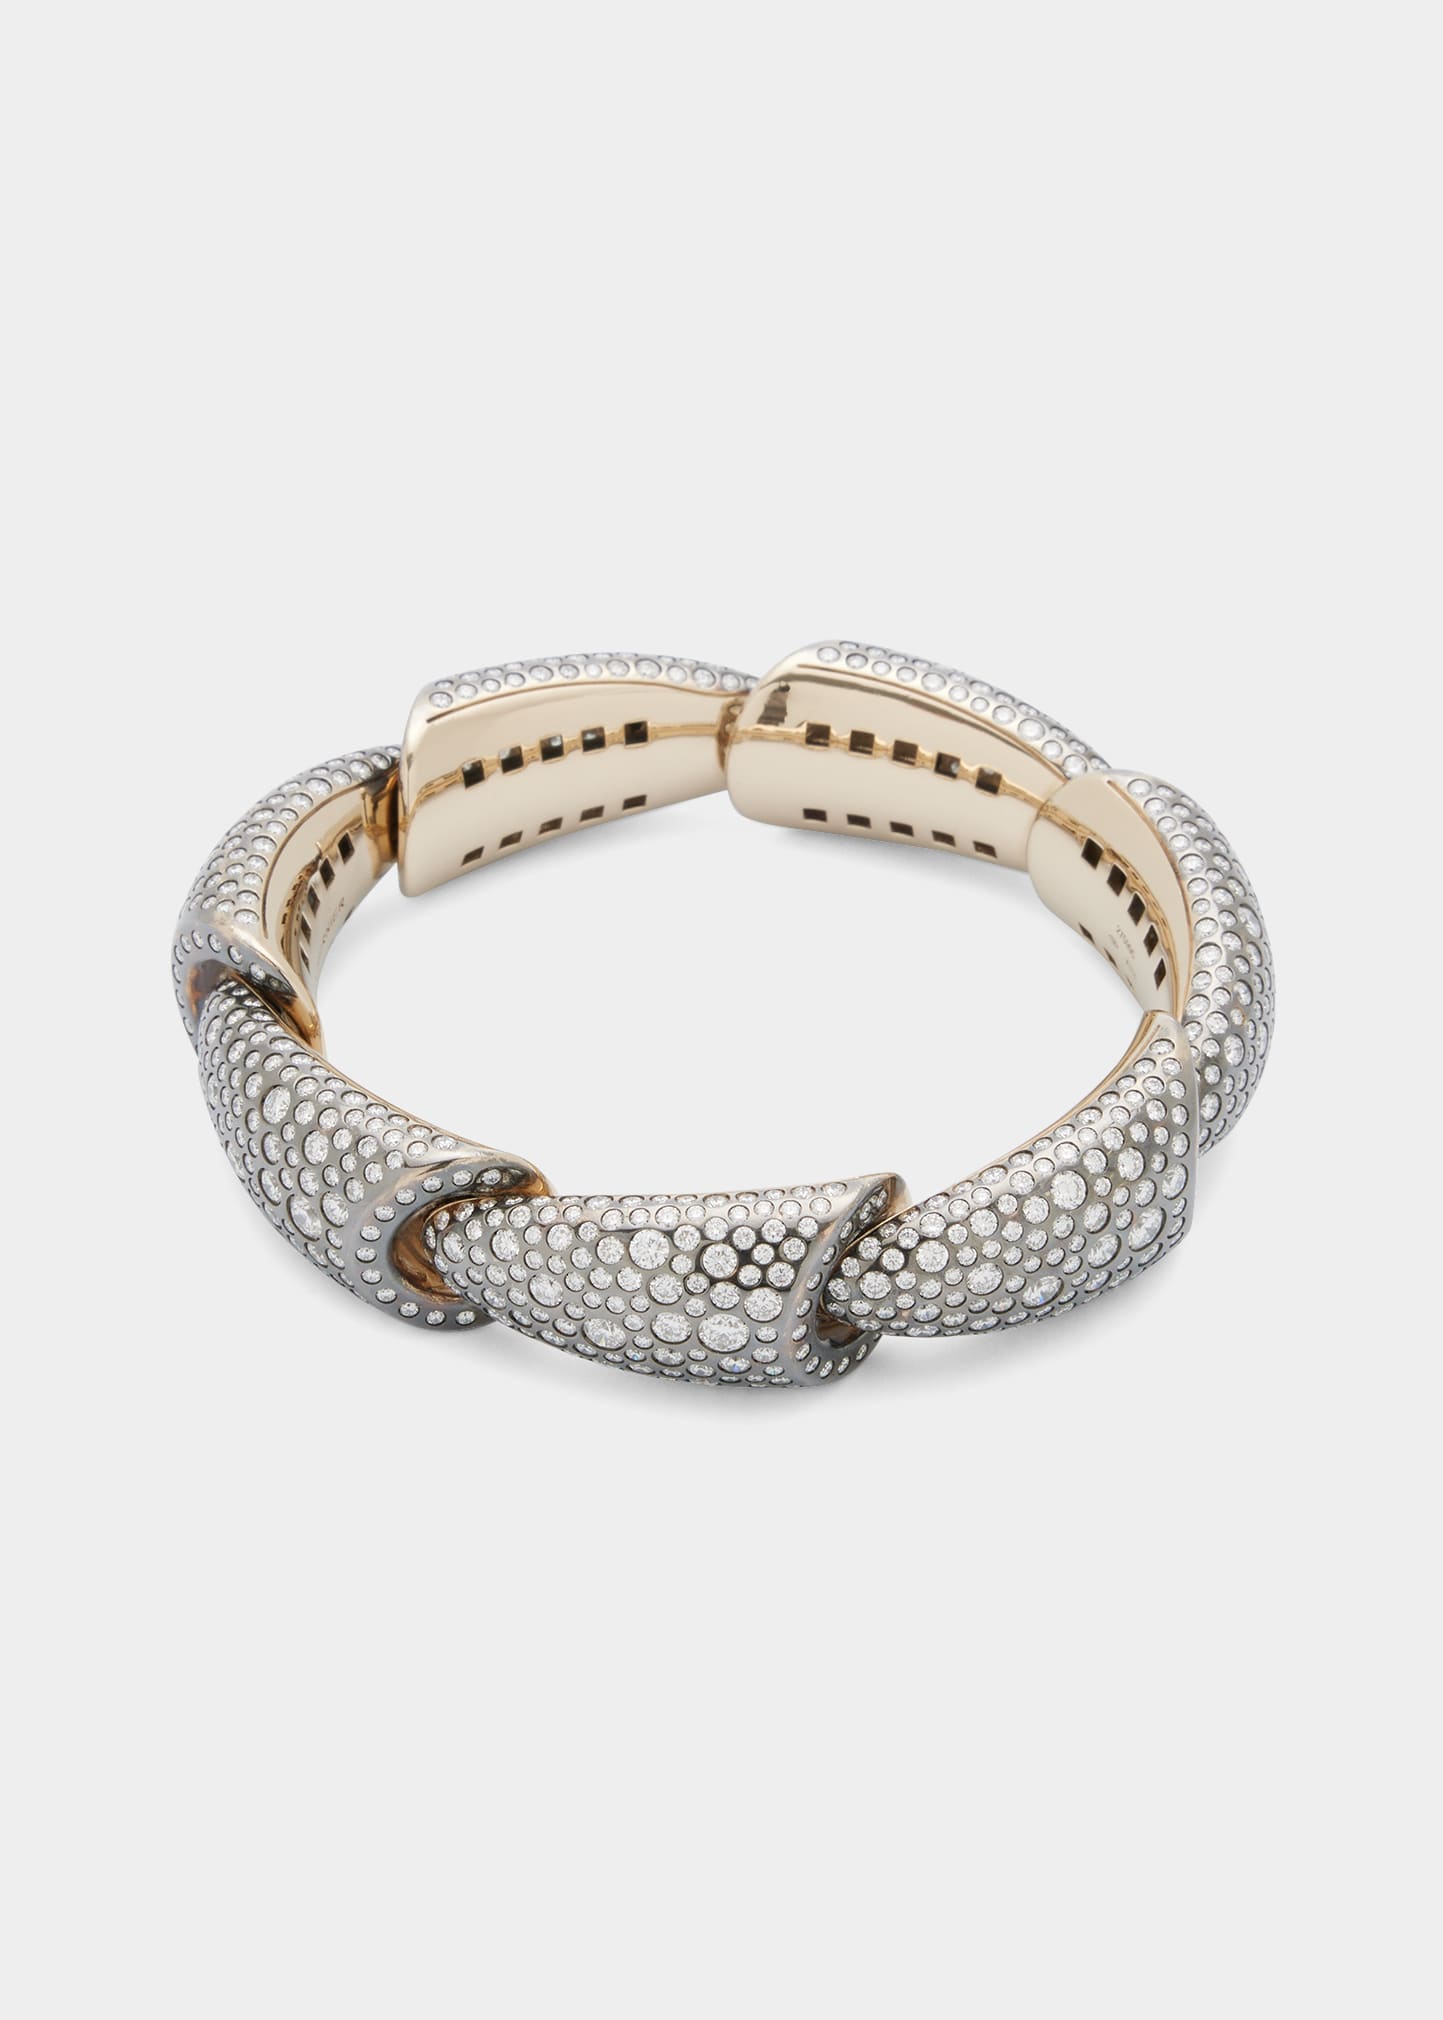 White Gold Calla Bracelet with Diamonds set in Eyeliner Pave